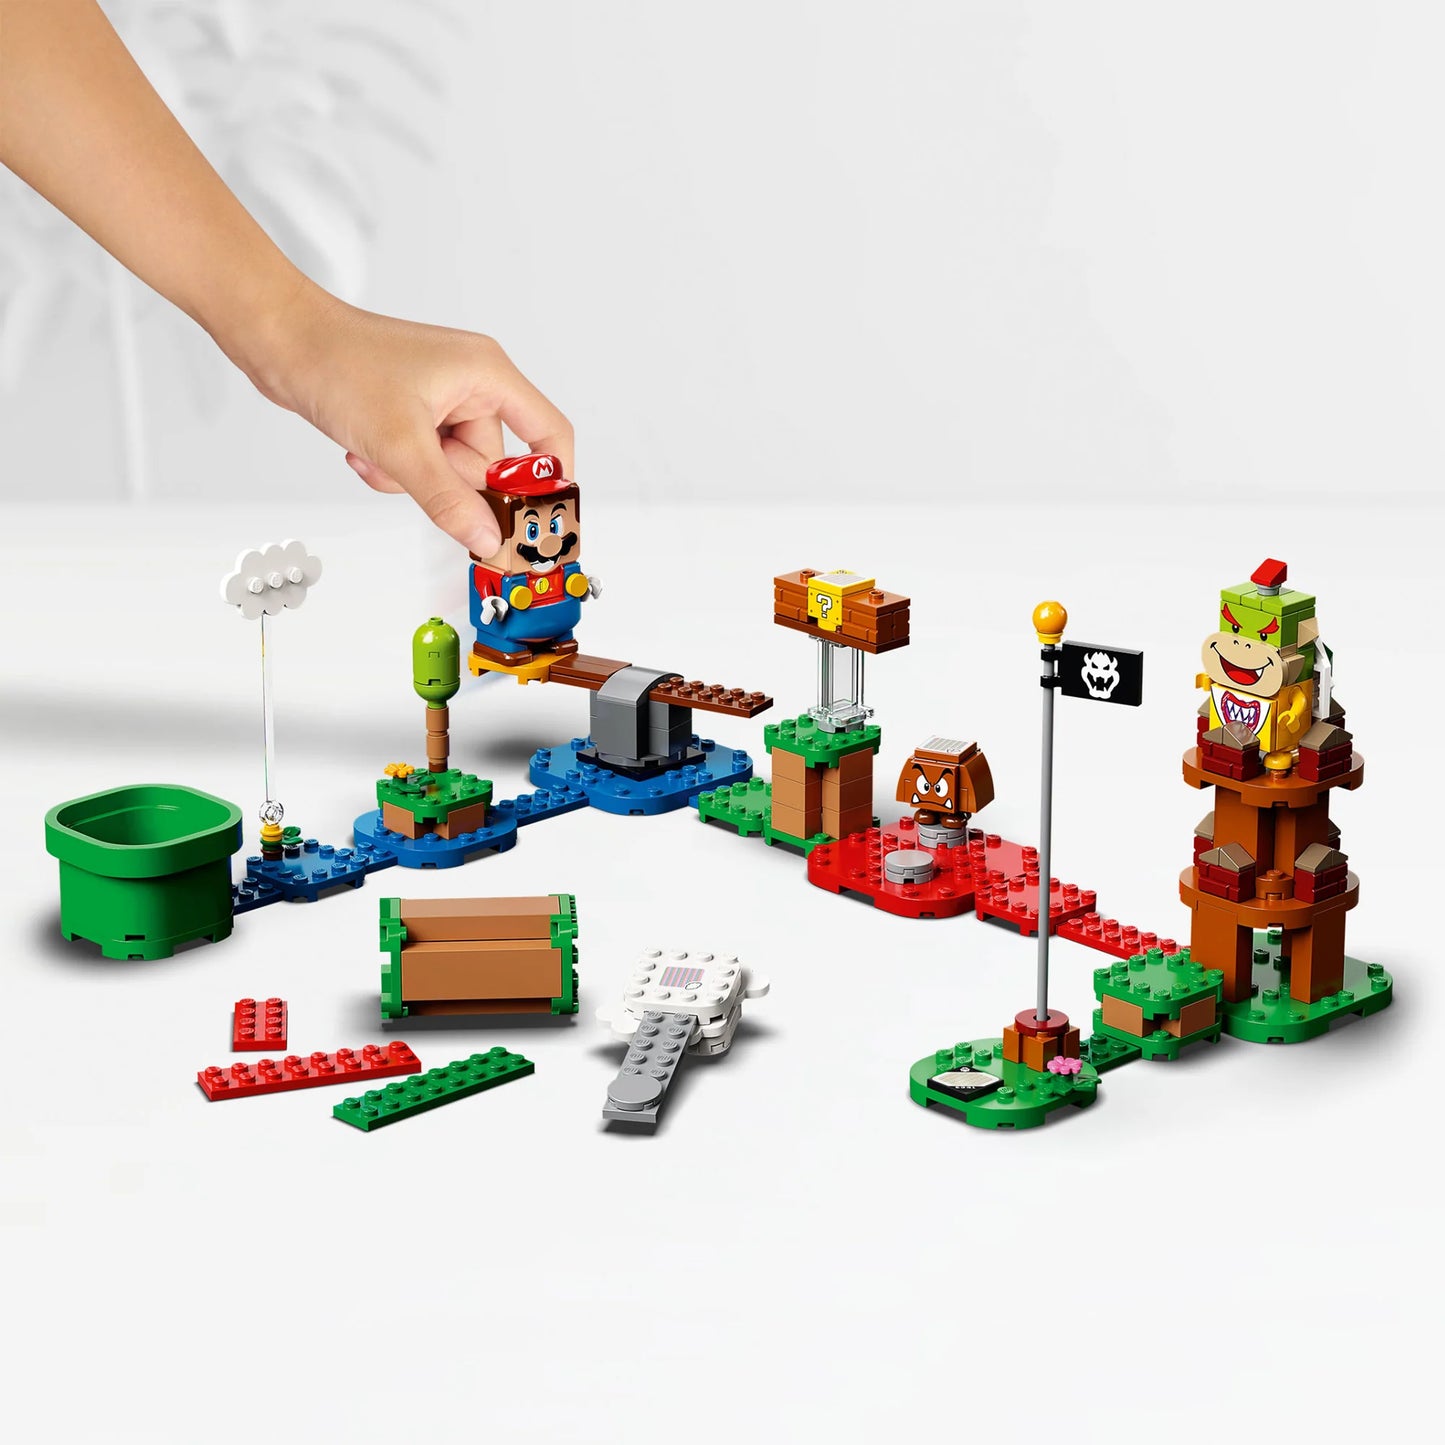 Adventures with Mario starter set - LEGO Super Mario